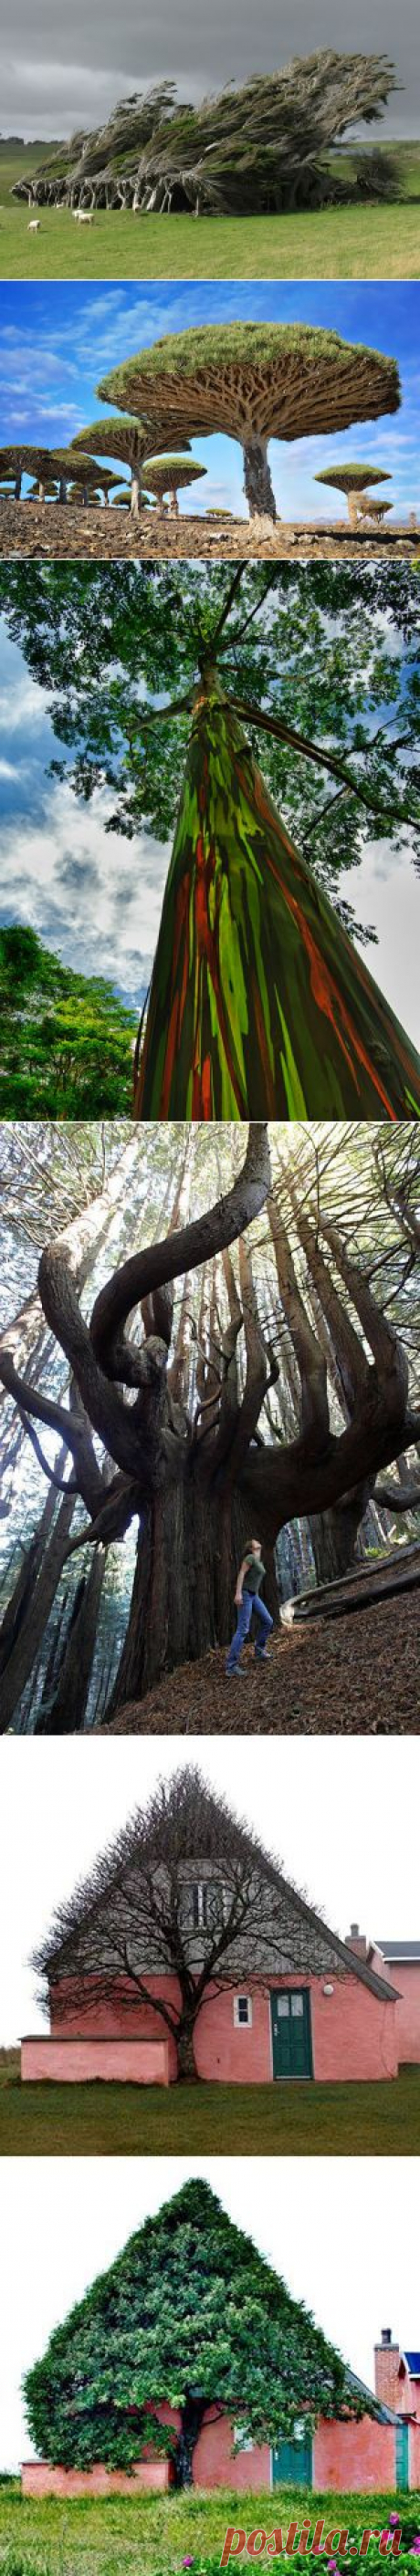 amazing trees | Dusky's Wonders